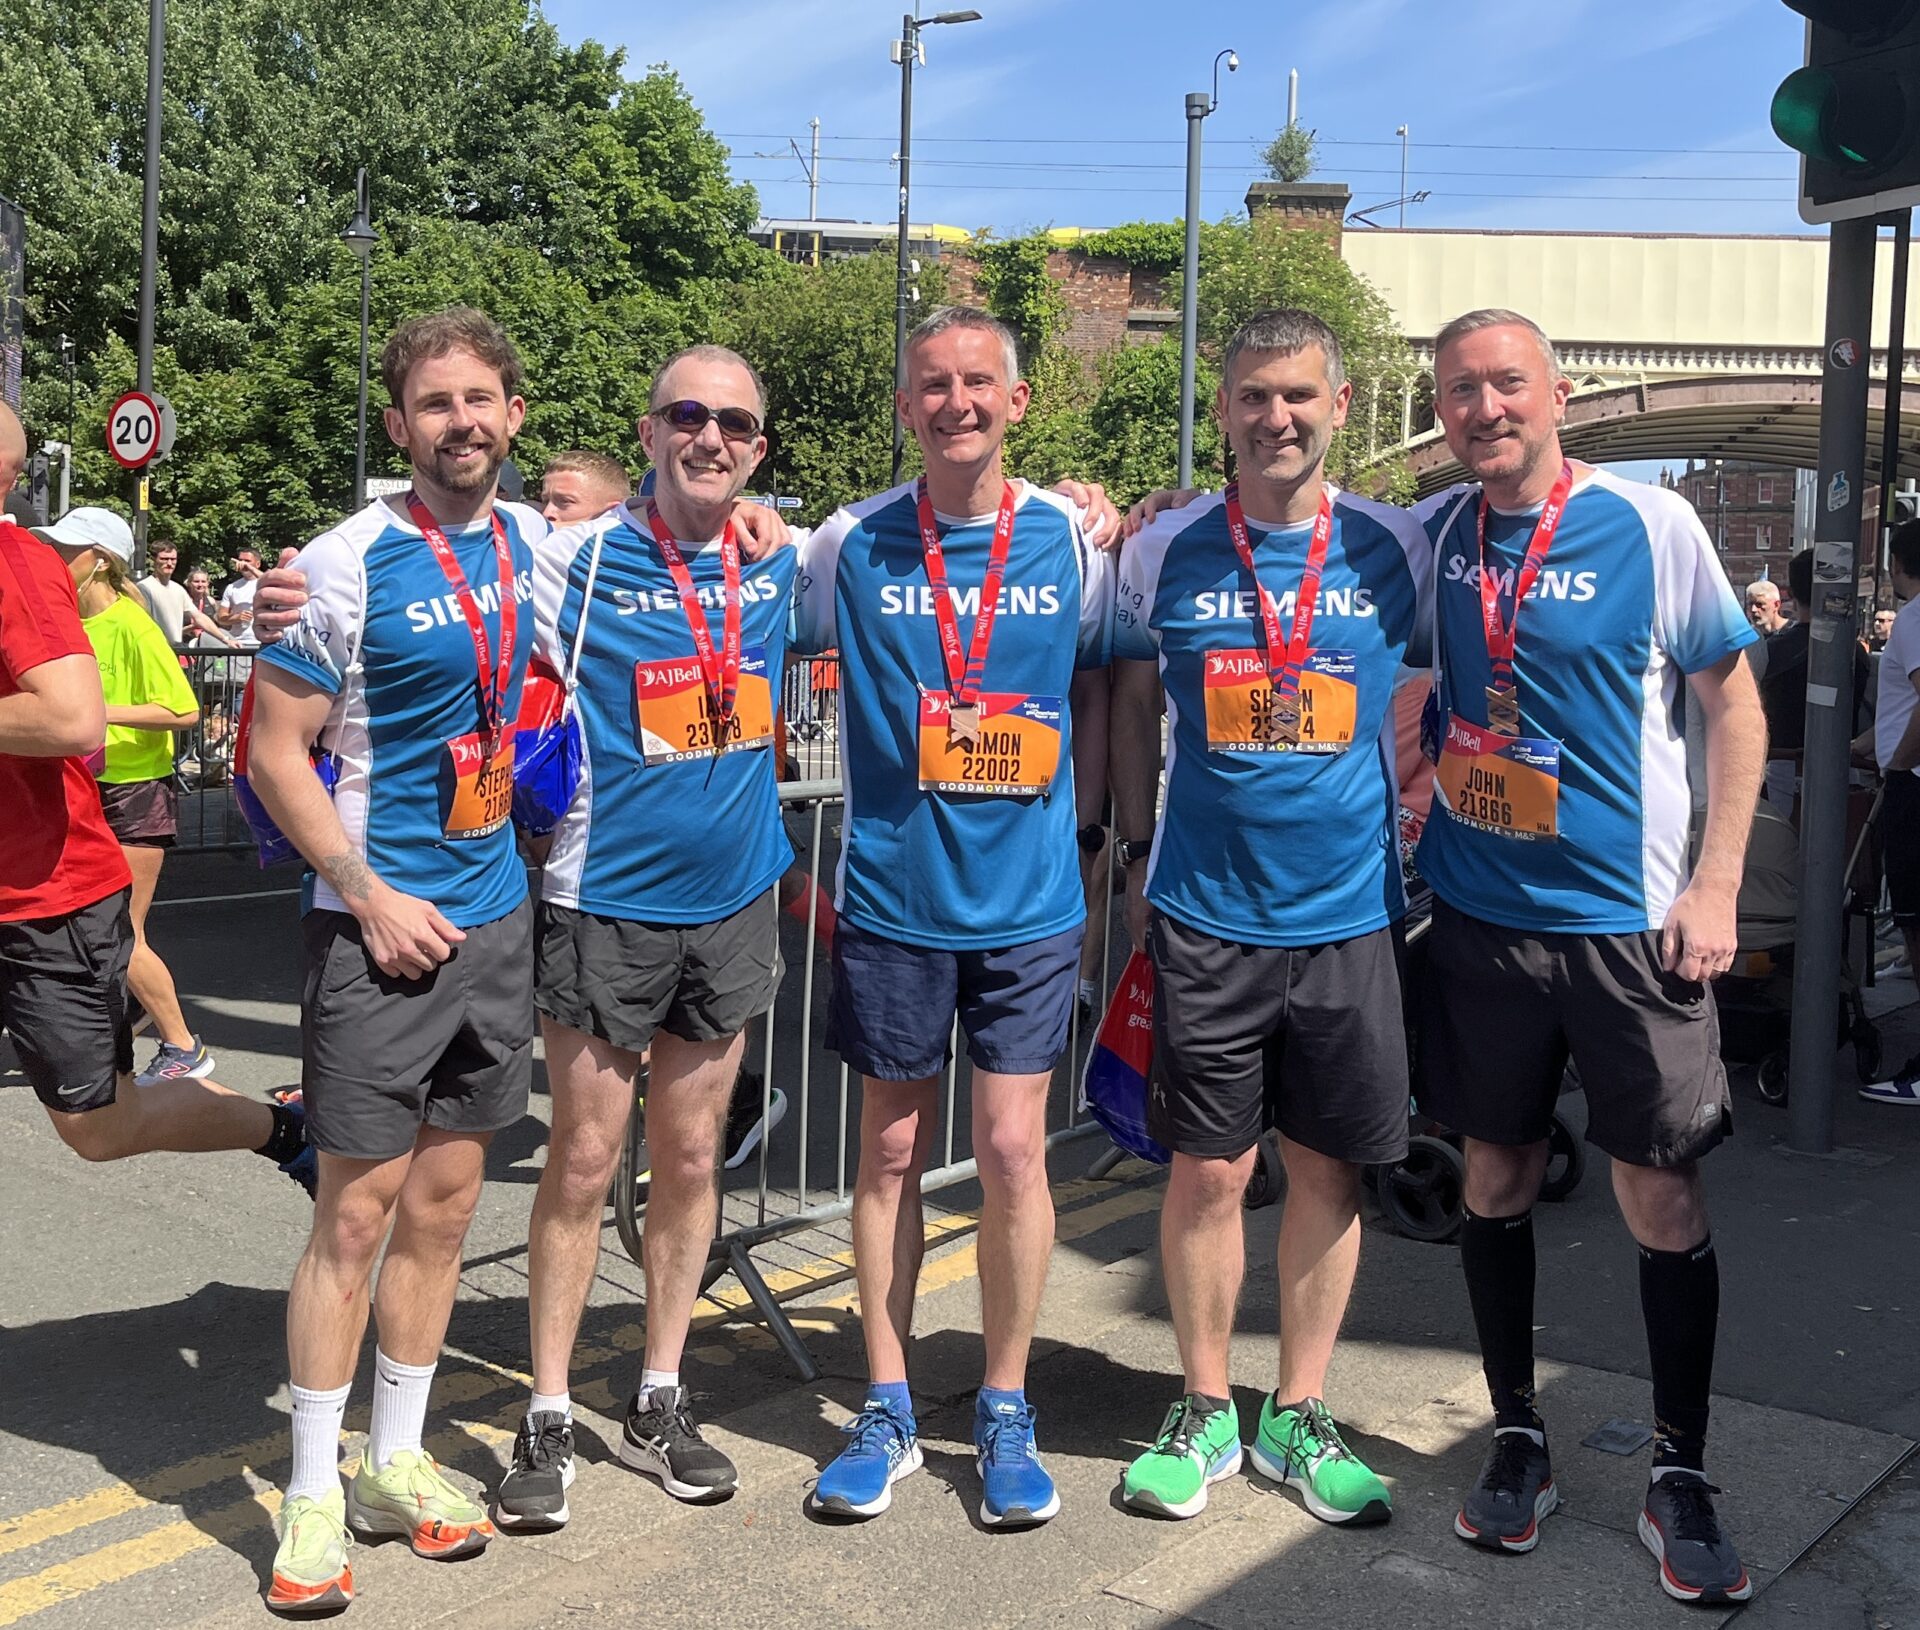 Five men wearing running vests and medals stood under a railway bridge